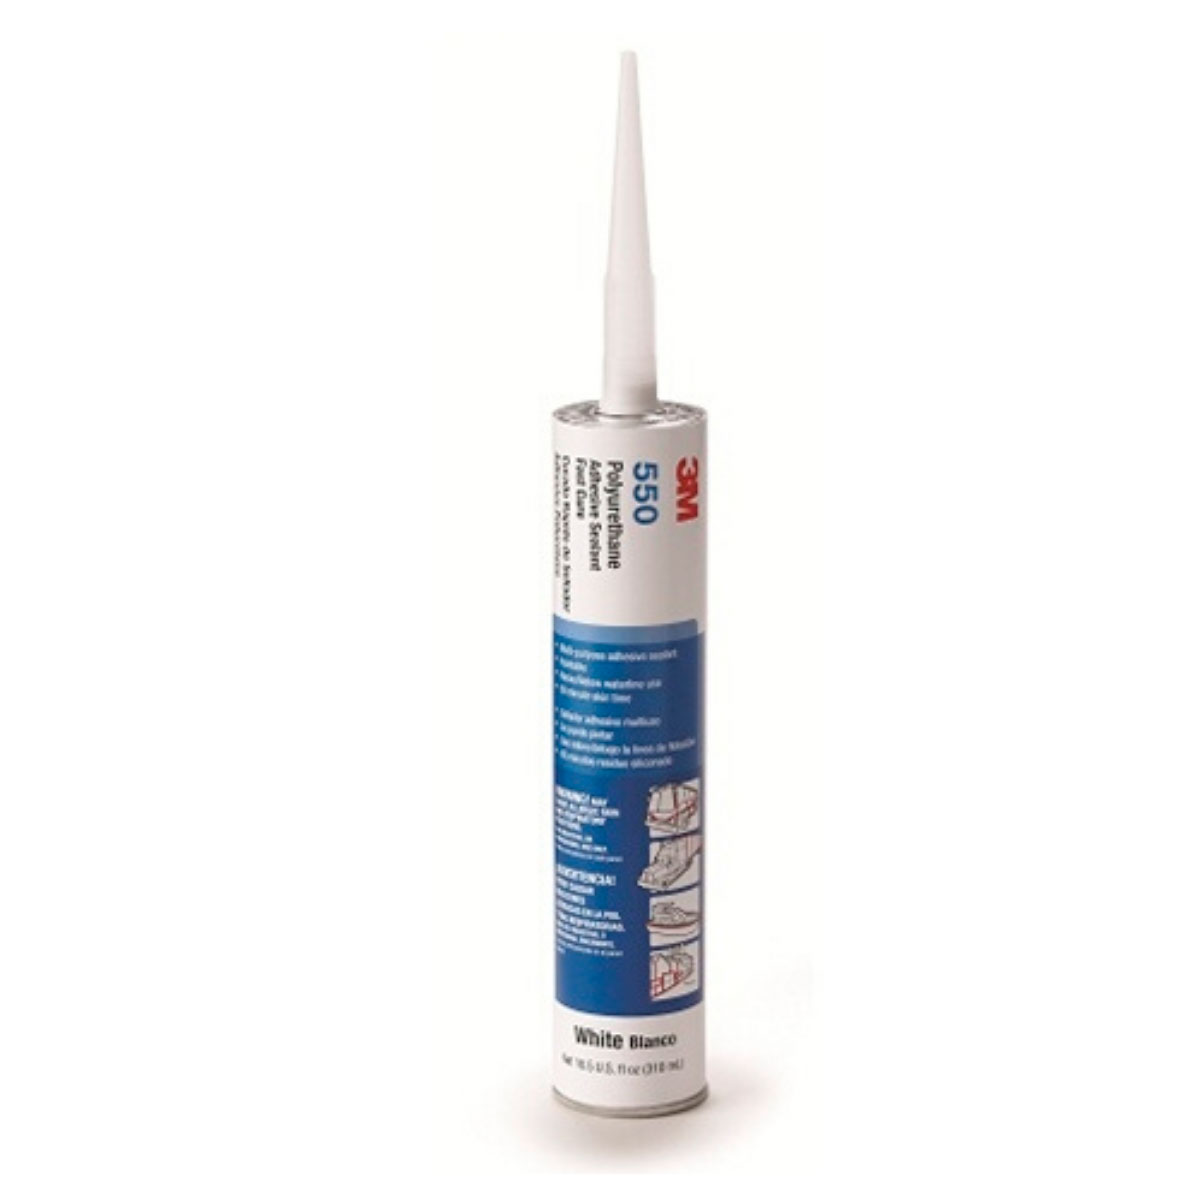 insulin syringe (1)